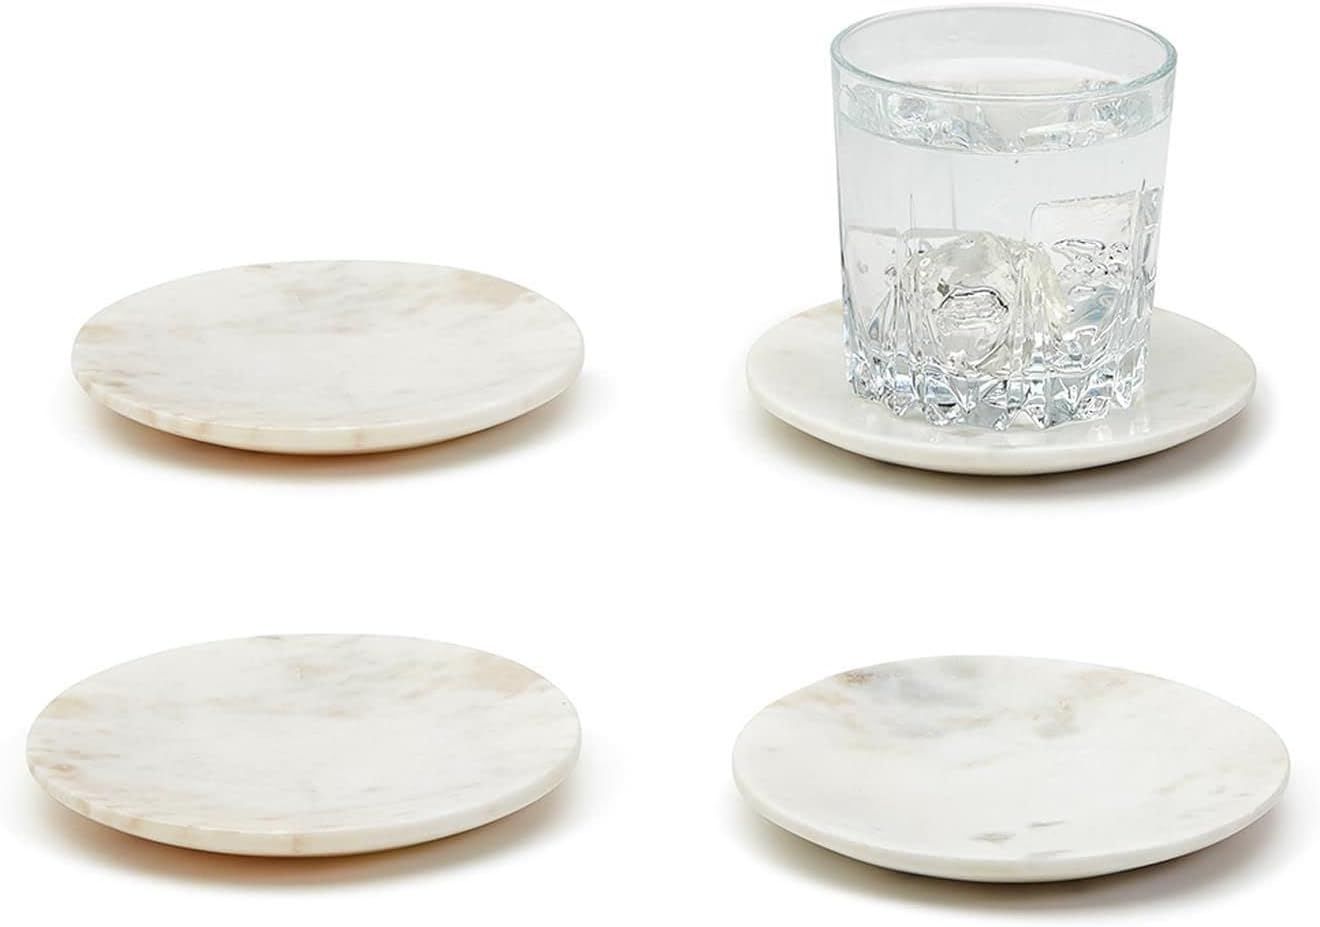 Two's Company Set of 4 Wht Marble Coasters | Amazon (US)